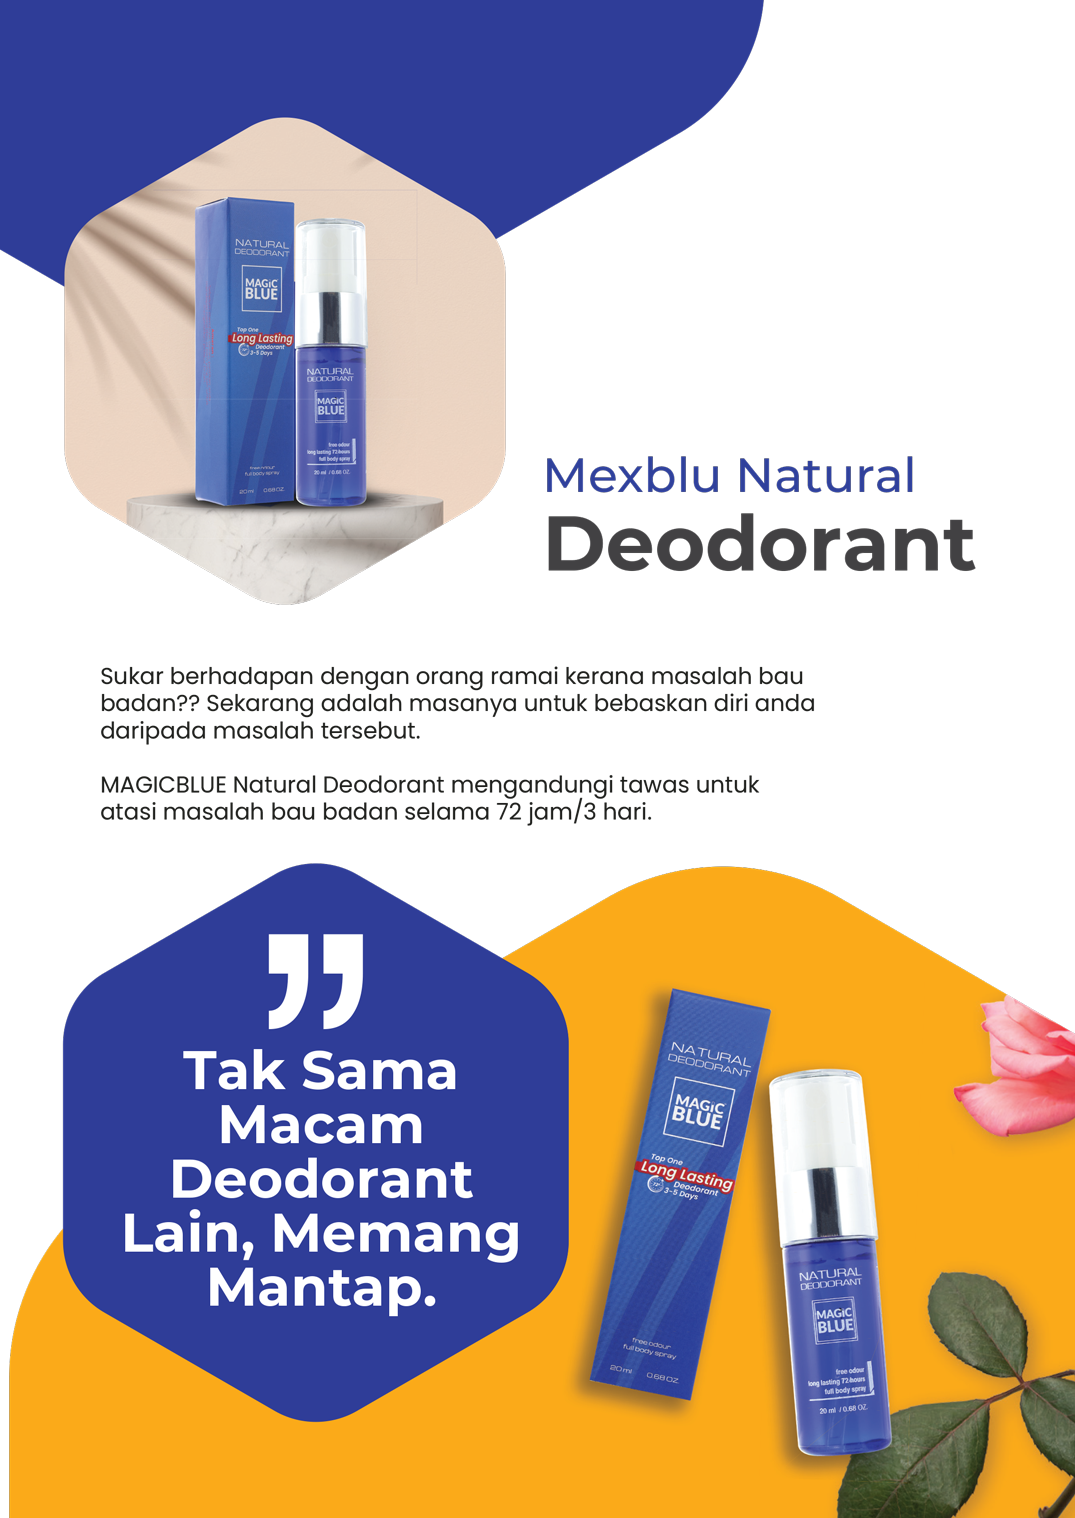 Mexblu Natural Deodorant